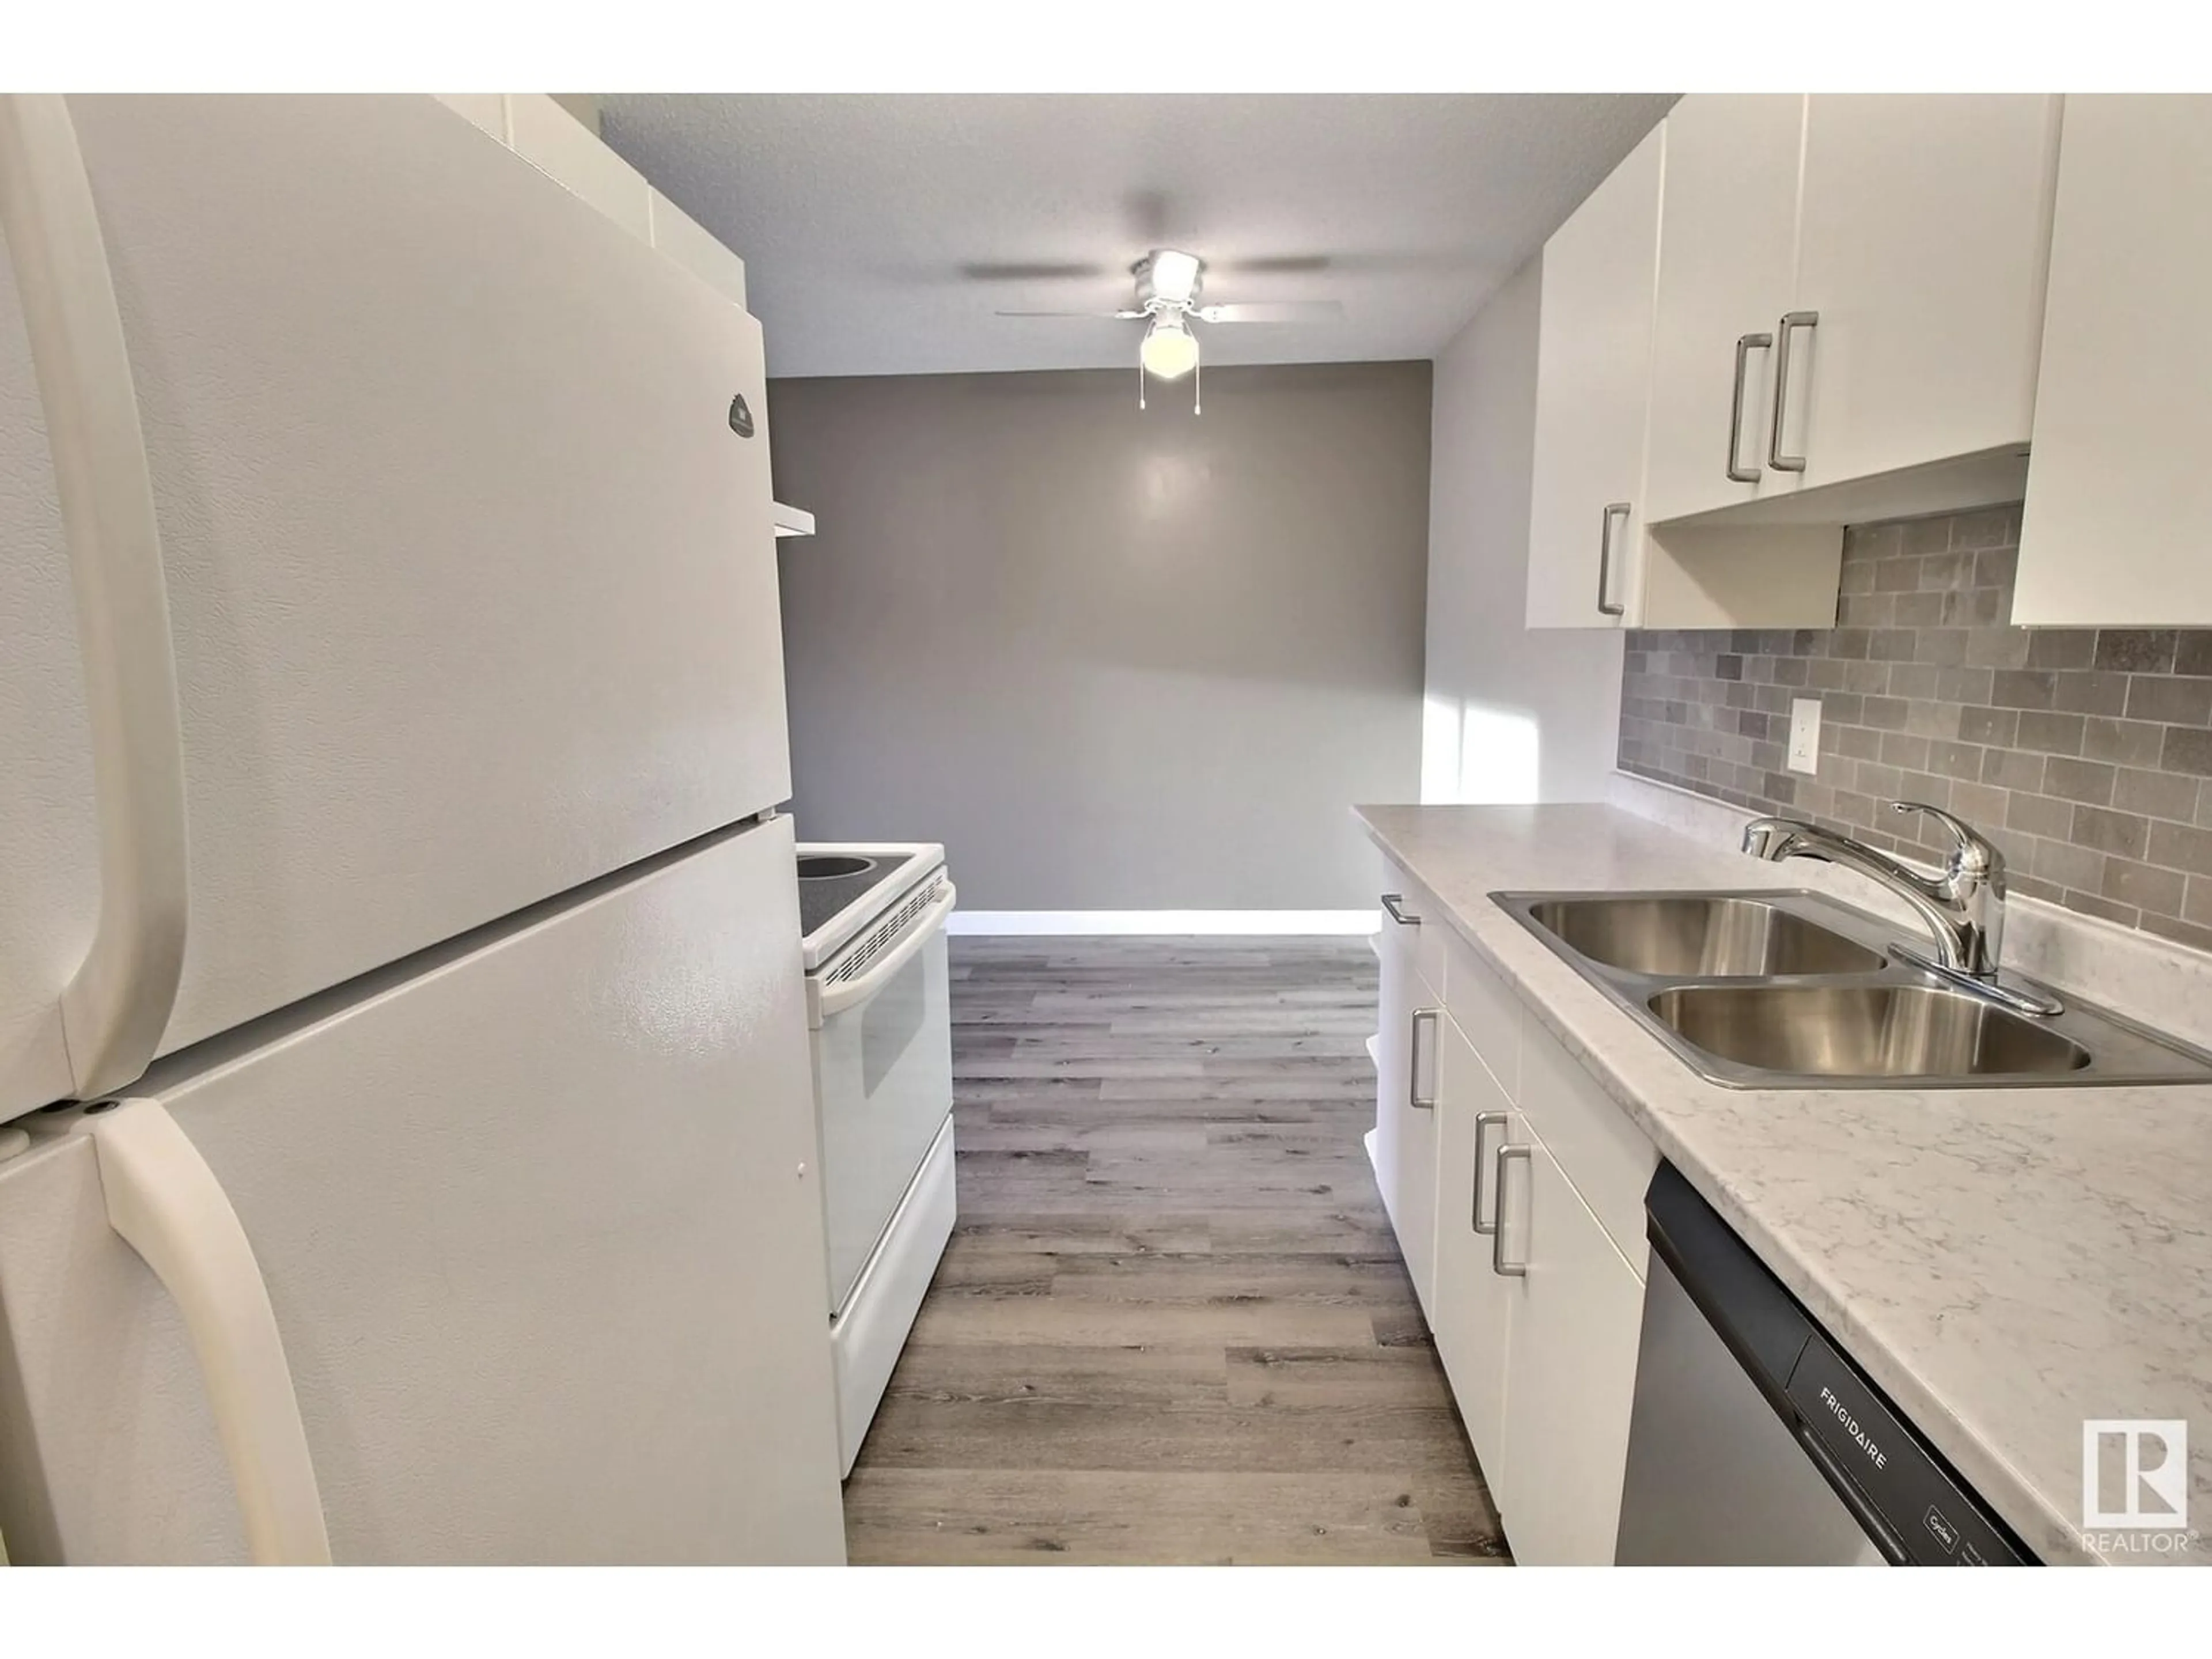 Standard kitchen for #403 10250 116 ST NW, Edmonton Alberta T5K1W4